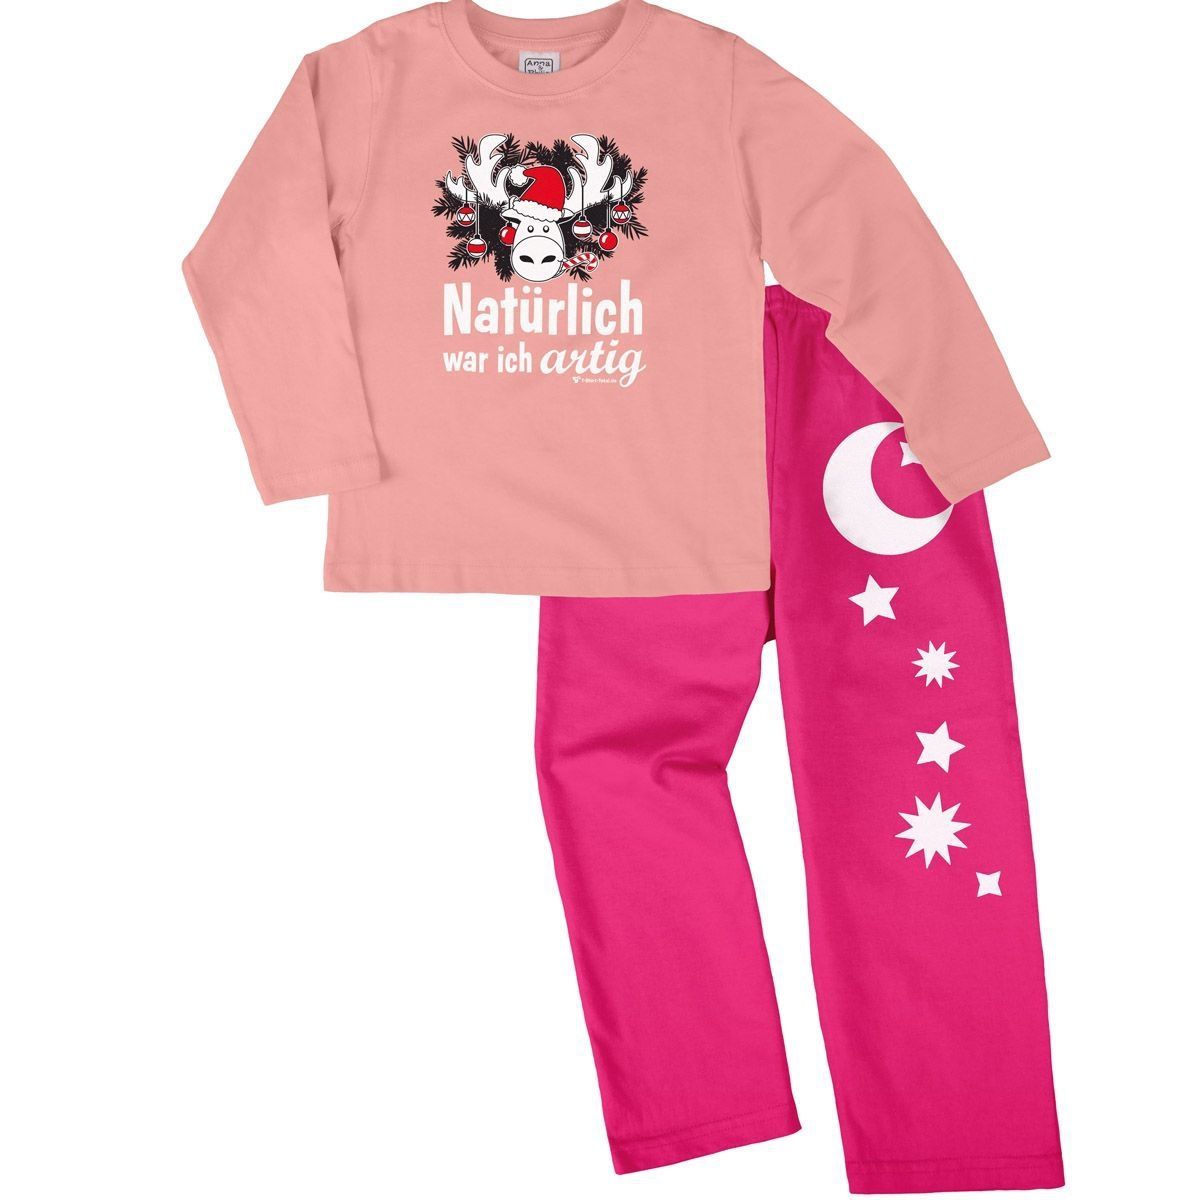 Natürlich artig Pyjama Set rosa / pink 110 / 116